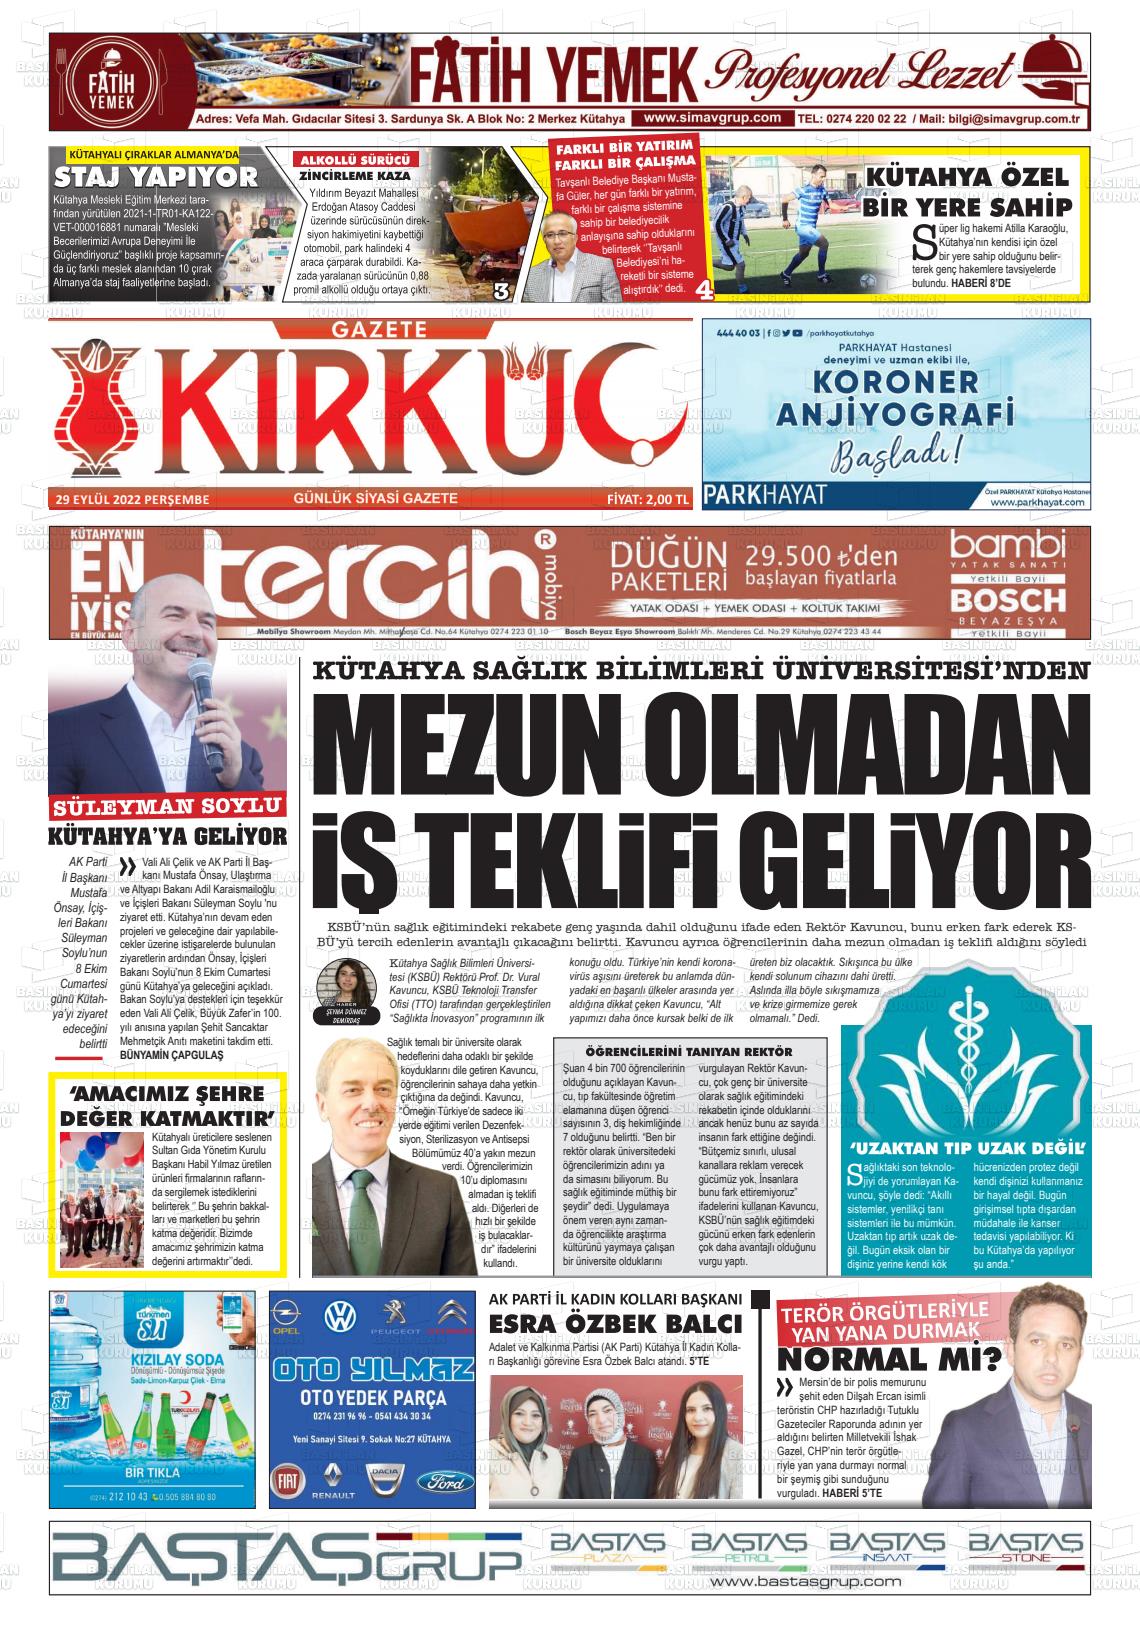 29 Eylül 2022 Gazete Kırküç Gazete Manşeti